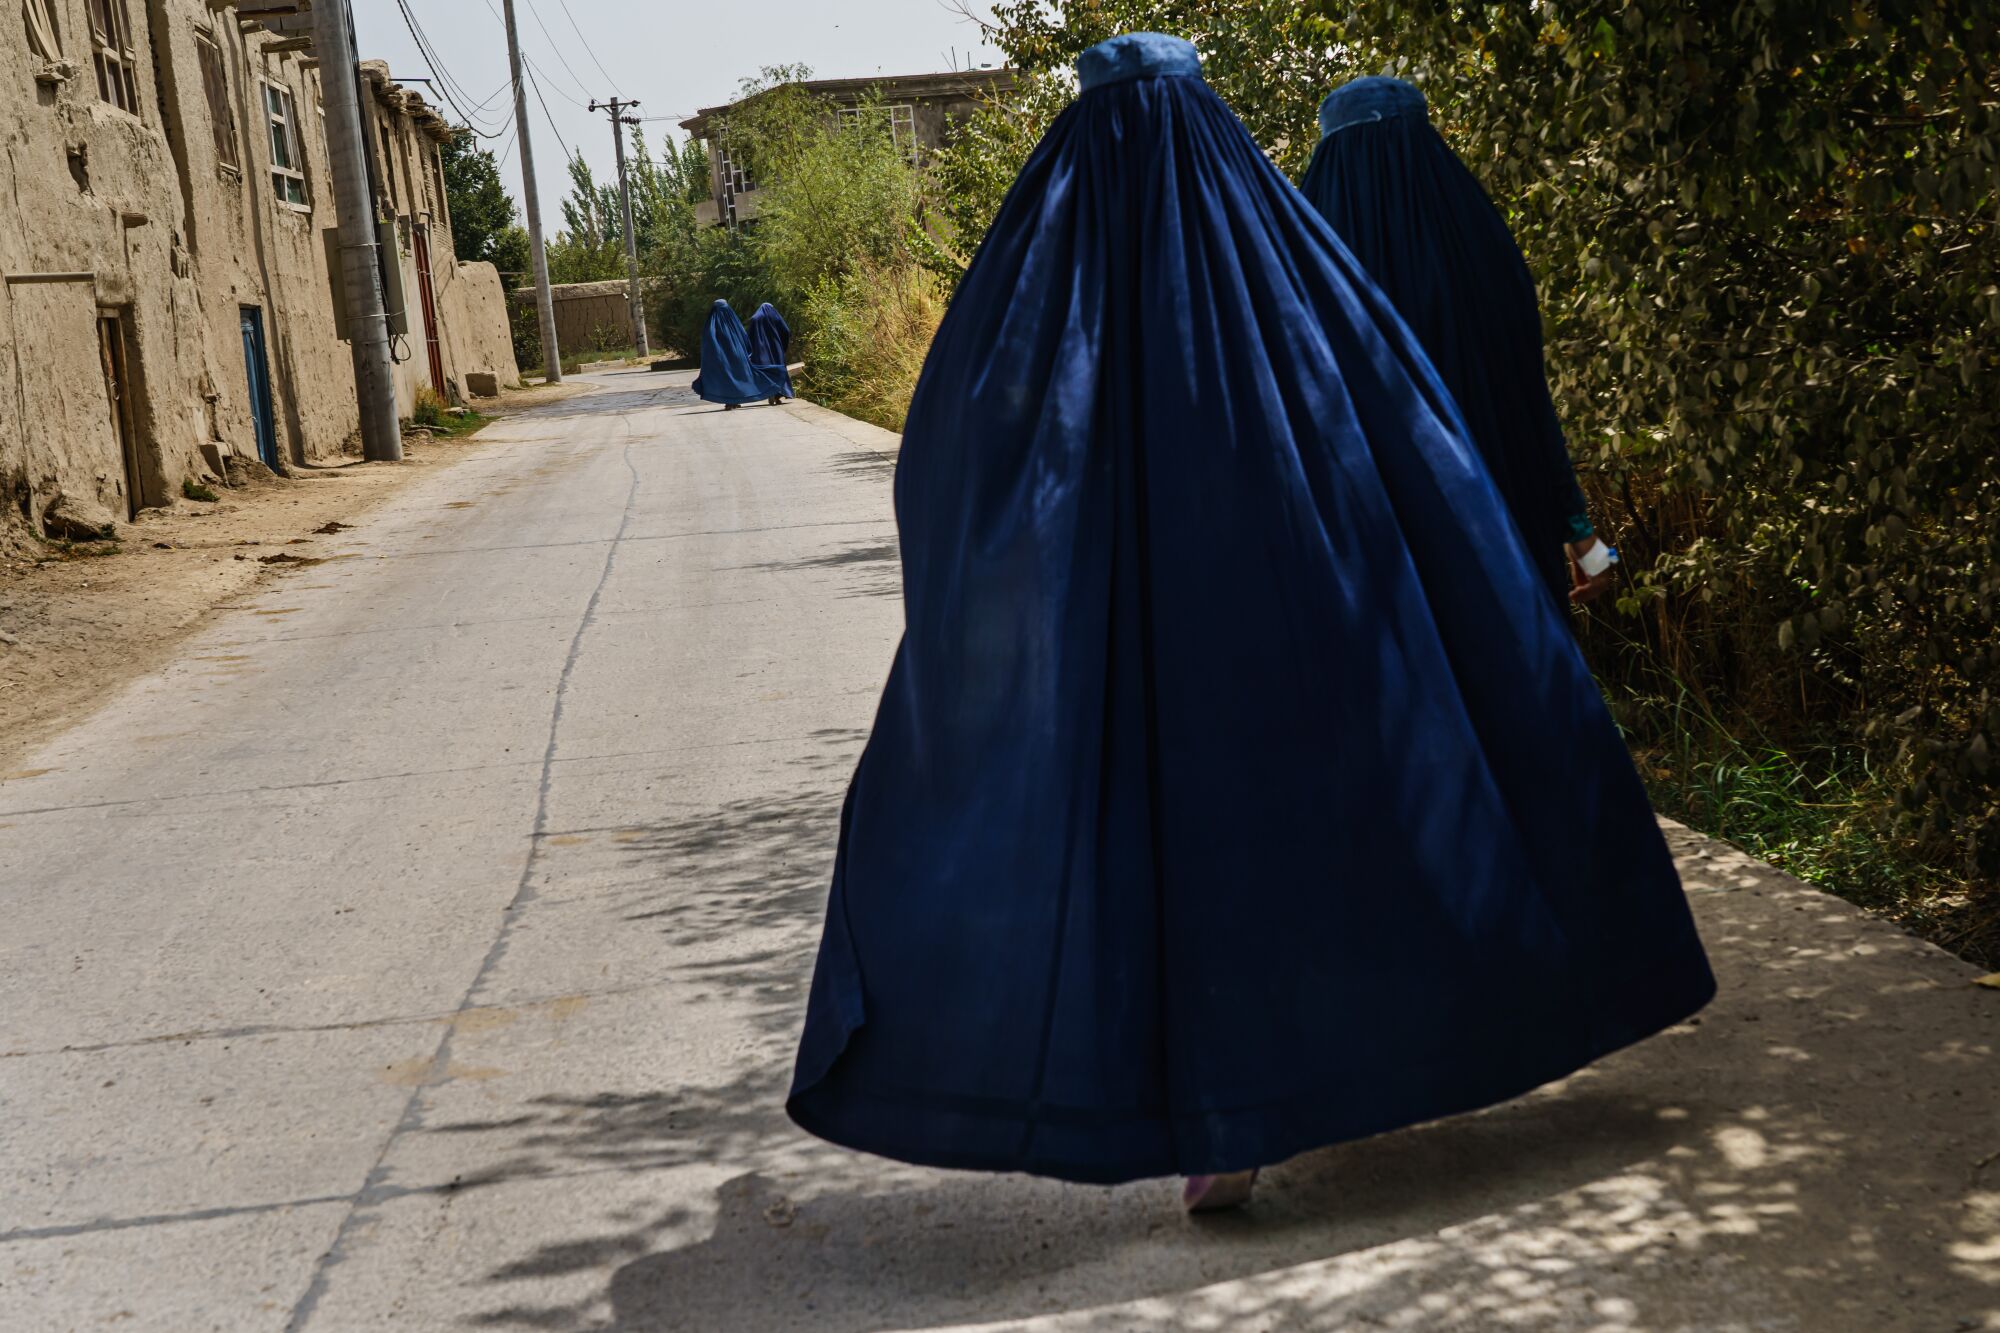 Women in burqas walking in the street